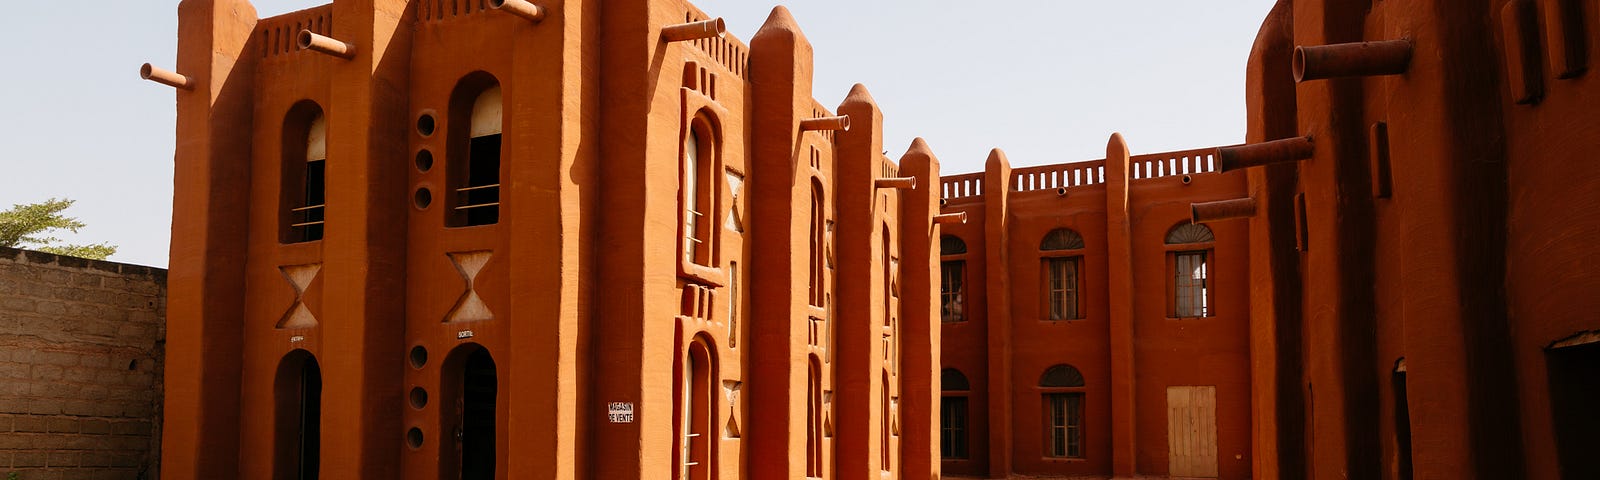 Indigene Architektur in Ségou, WestAfrika, Mali.